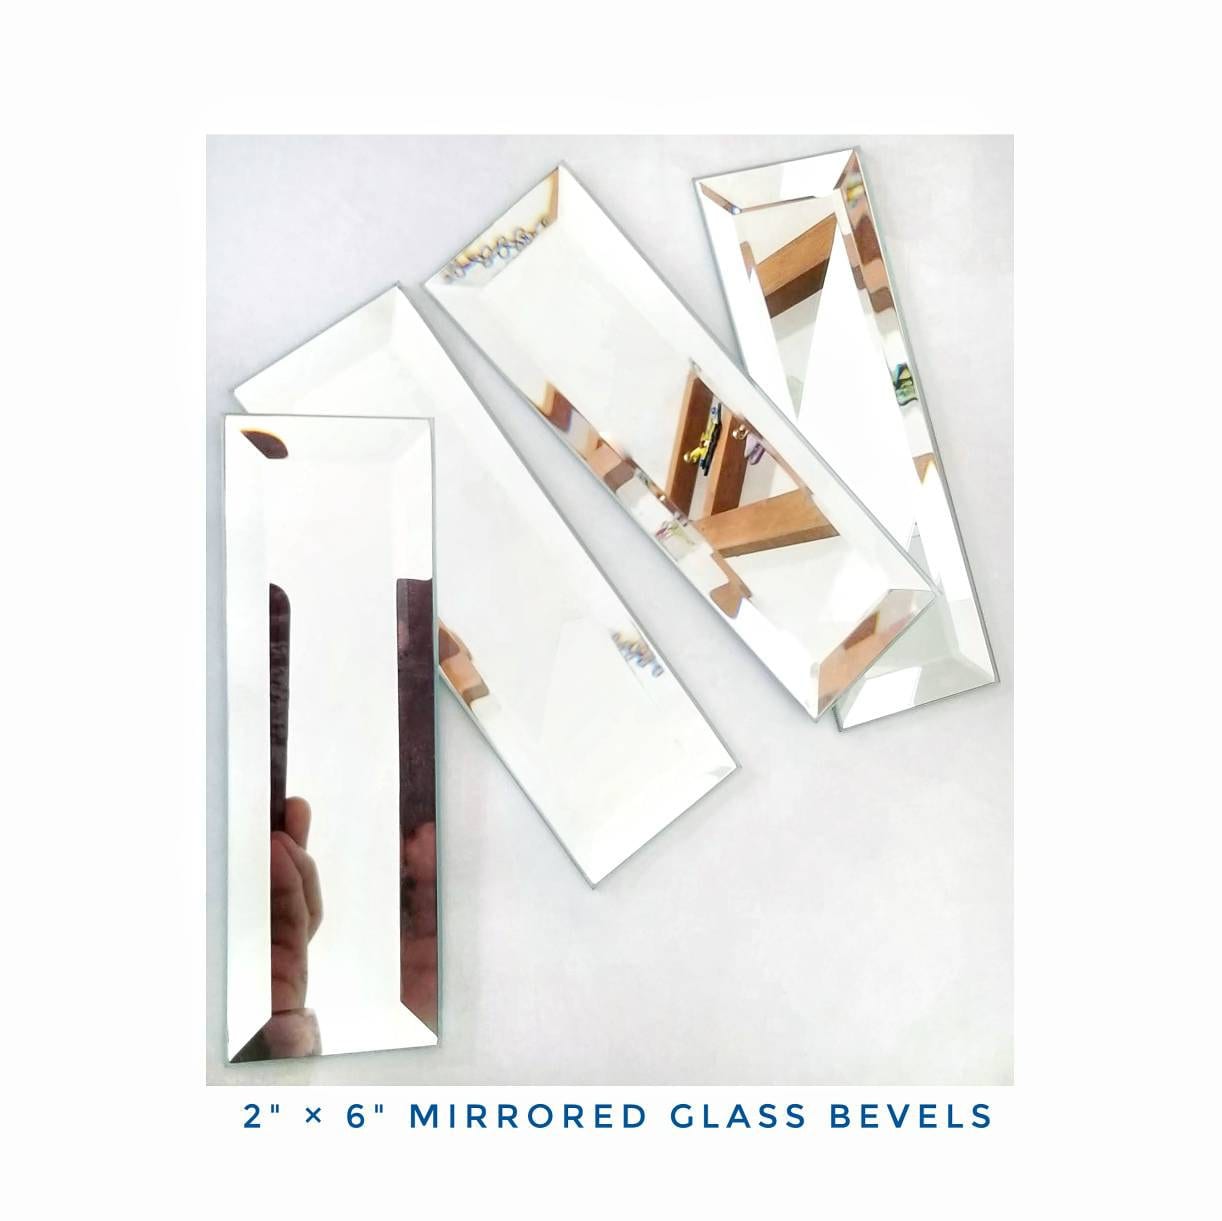 10 Pcs Self-Adhesive Mirror Tiles Flexible Reflective Mirror, 4x6 Inches